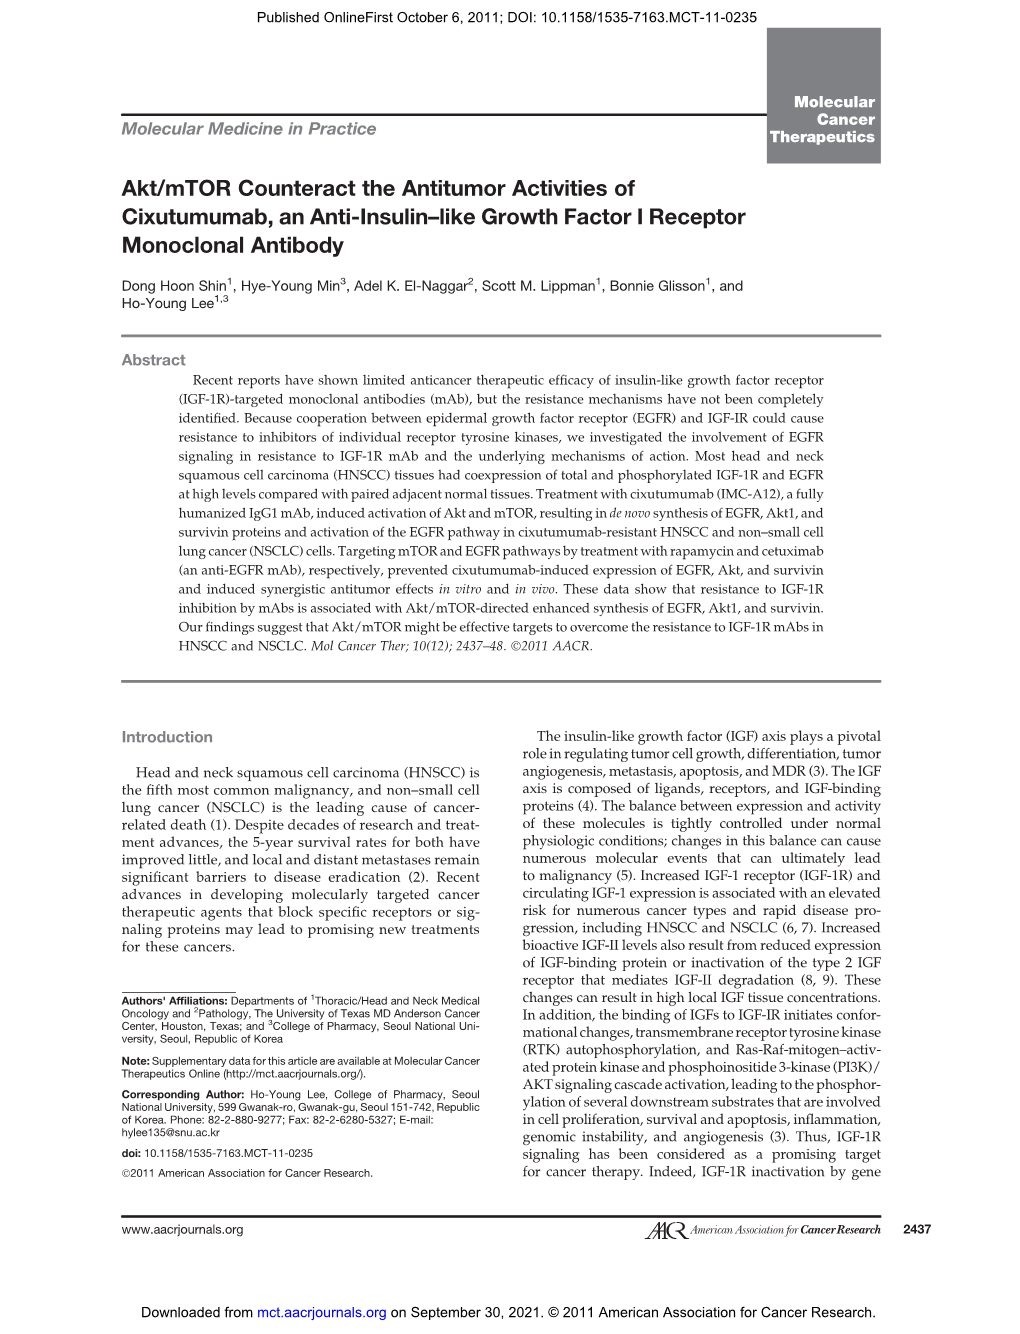 Akt/Mtor Counteract the Antitumor Activities of Cixutumumab, an Anti-Insulin–Like Growth Factor I Receptor Monoclonal Antibody